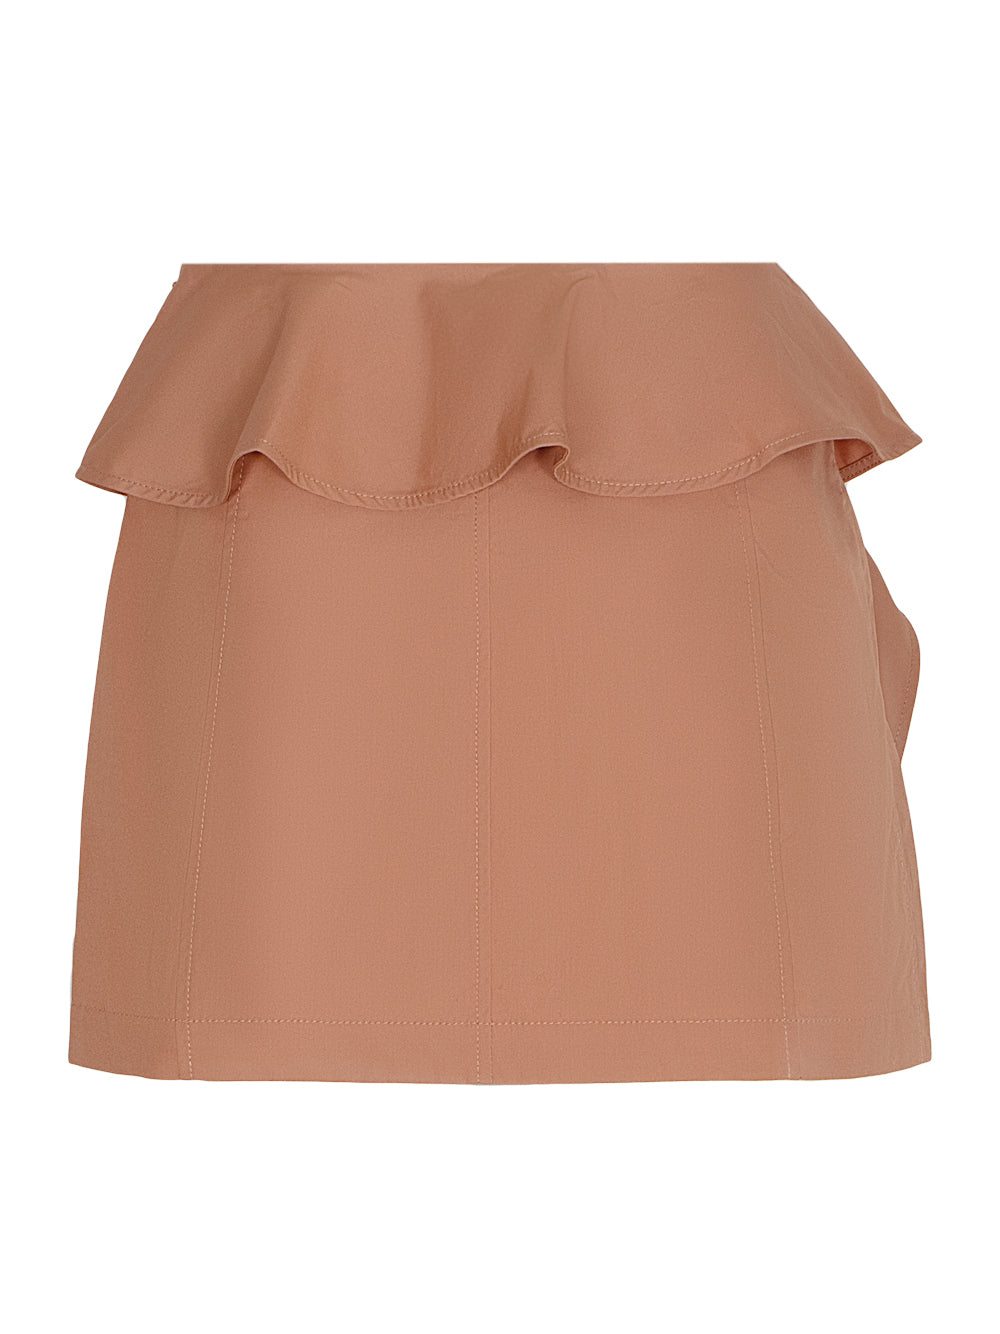 Sabi Skirt (Sedona)